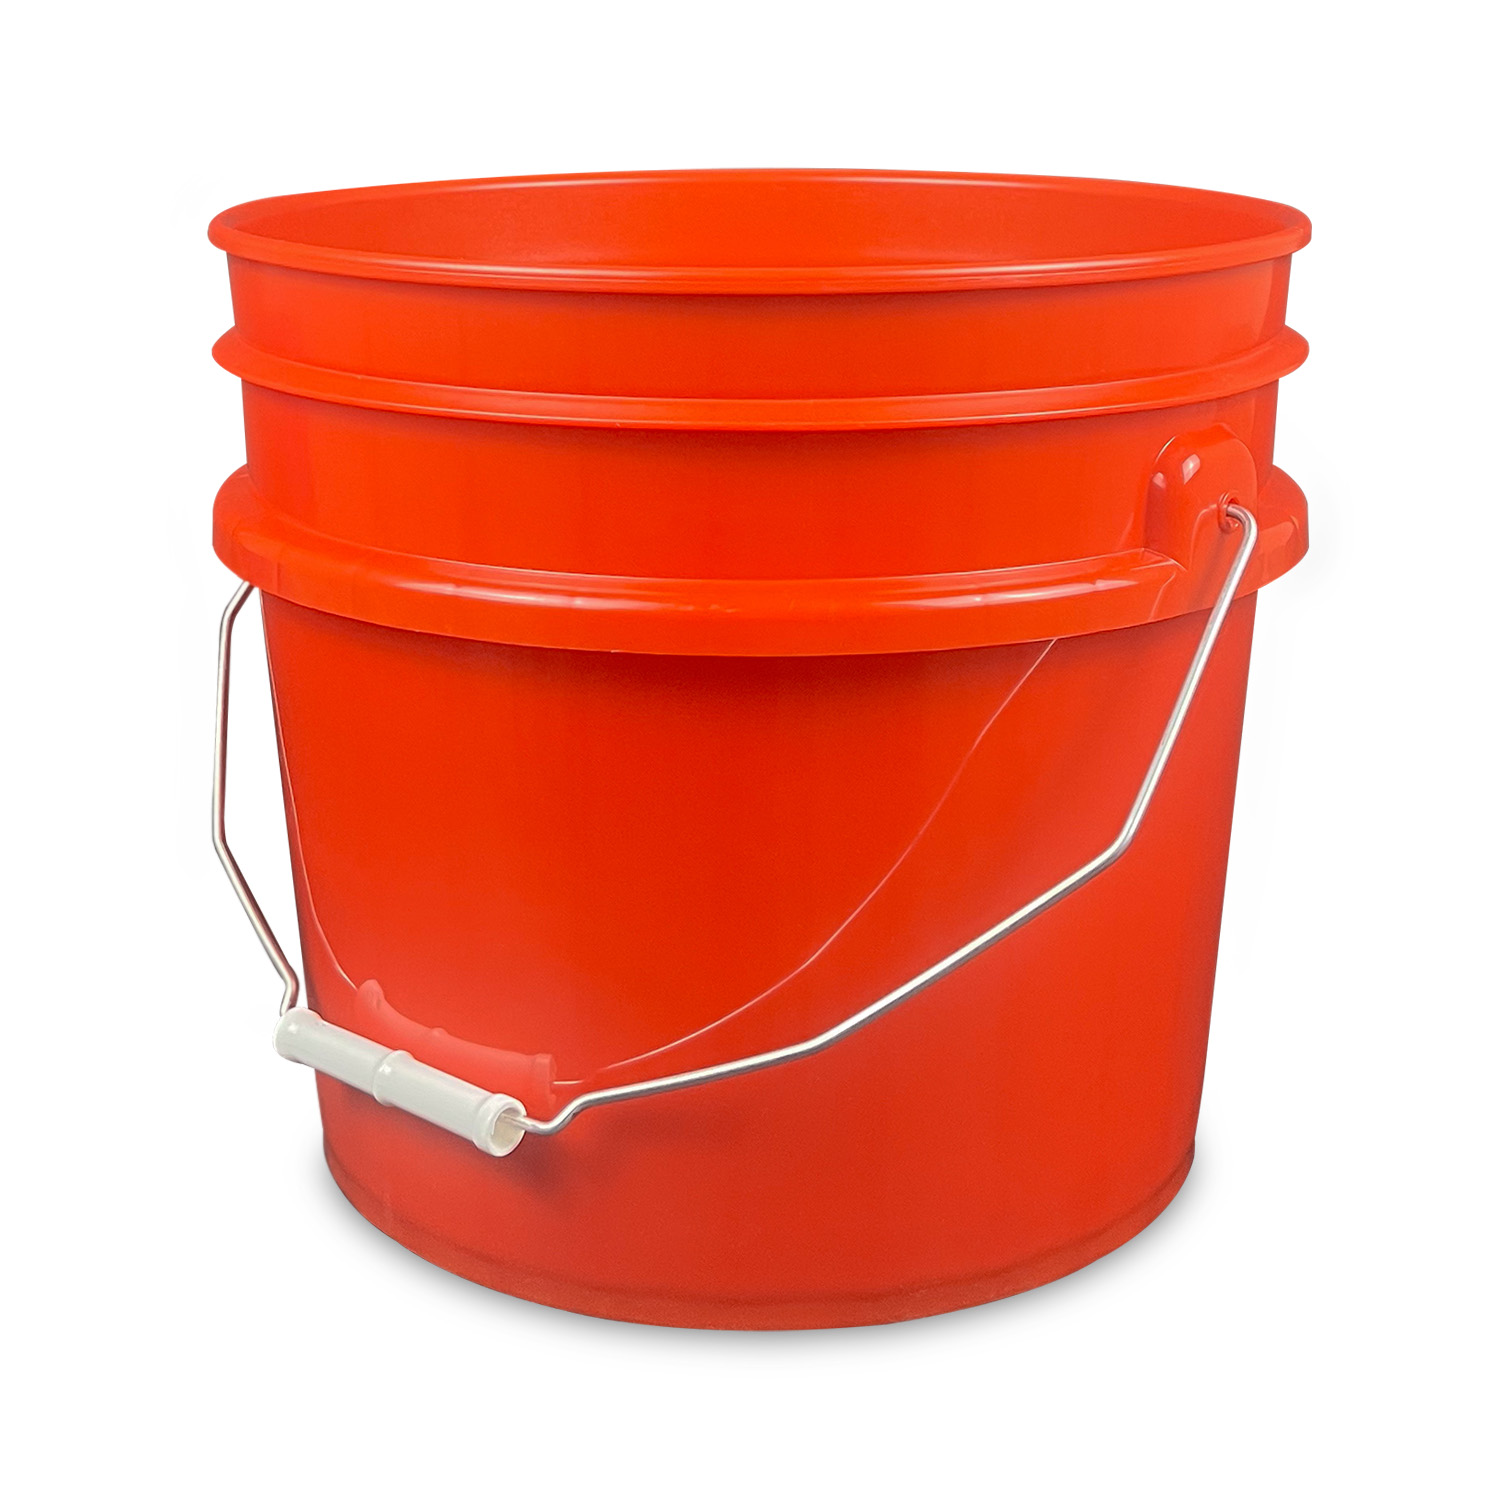 3.5 Gallon Food Grade Bucket